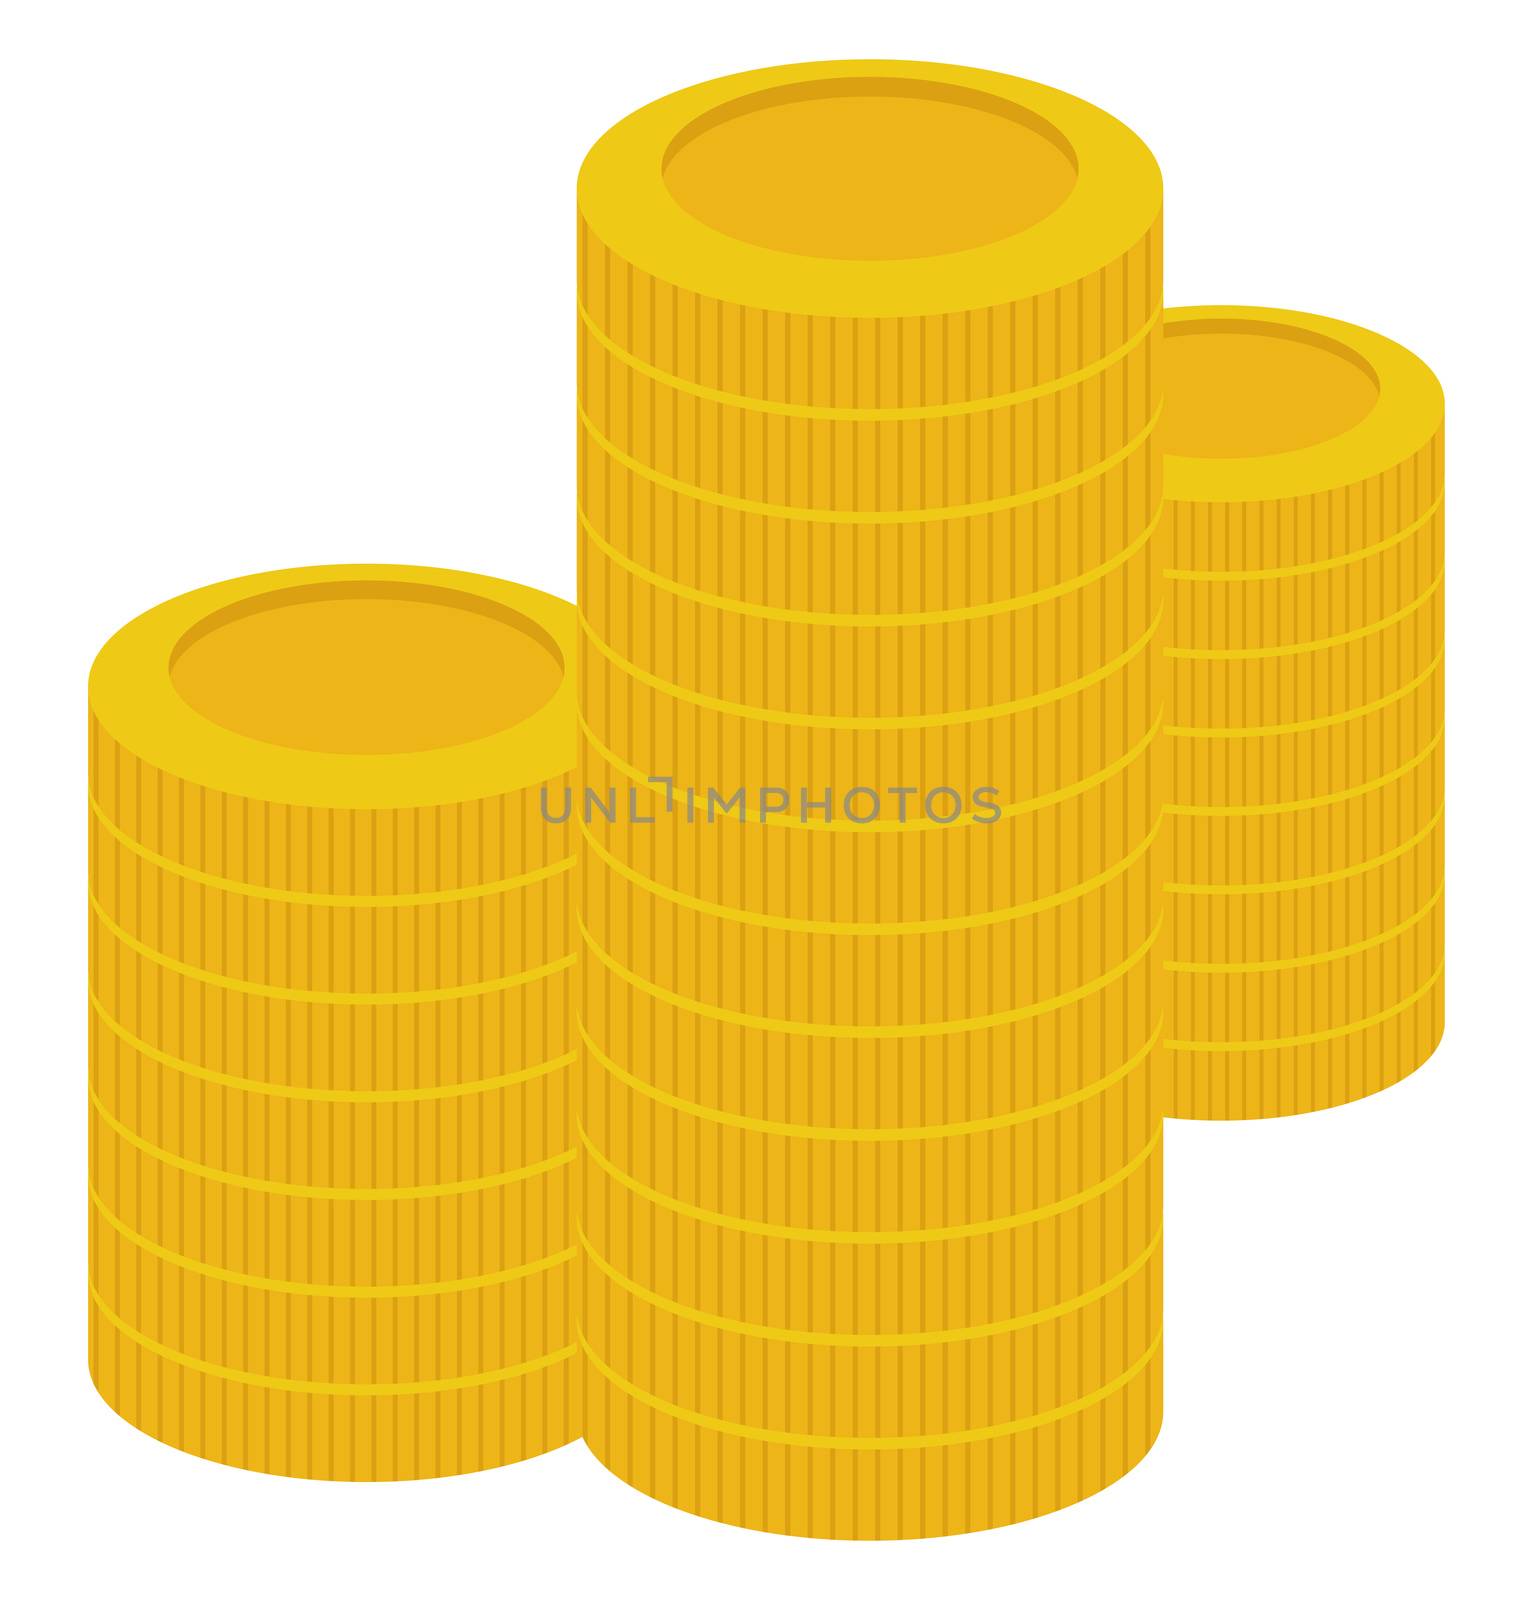 Money coins, illustration, vector on white background